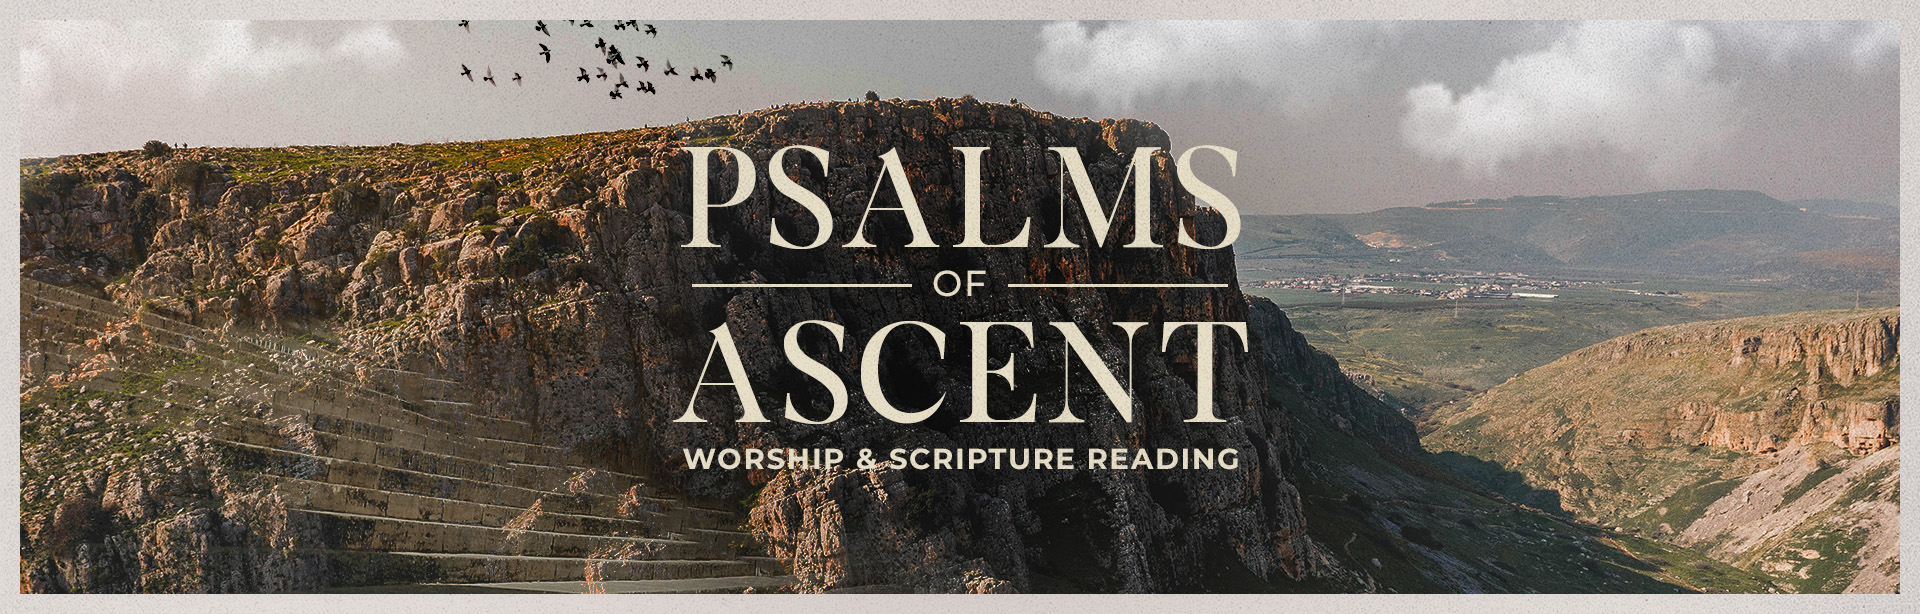 Psalms of Ascent 